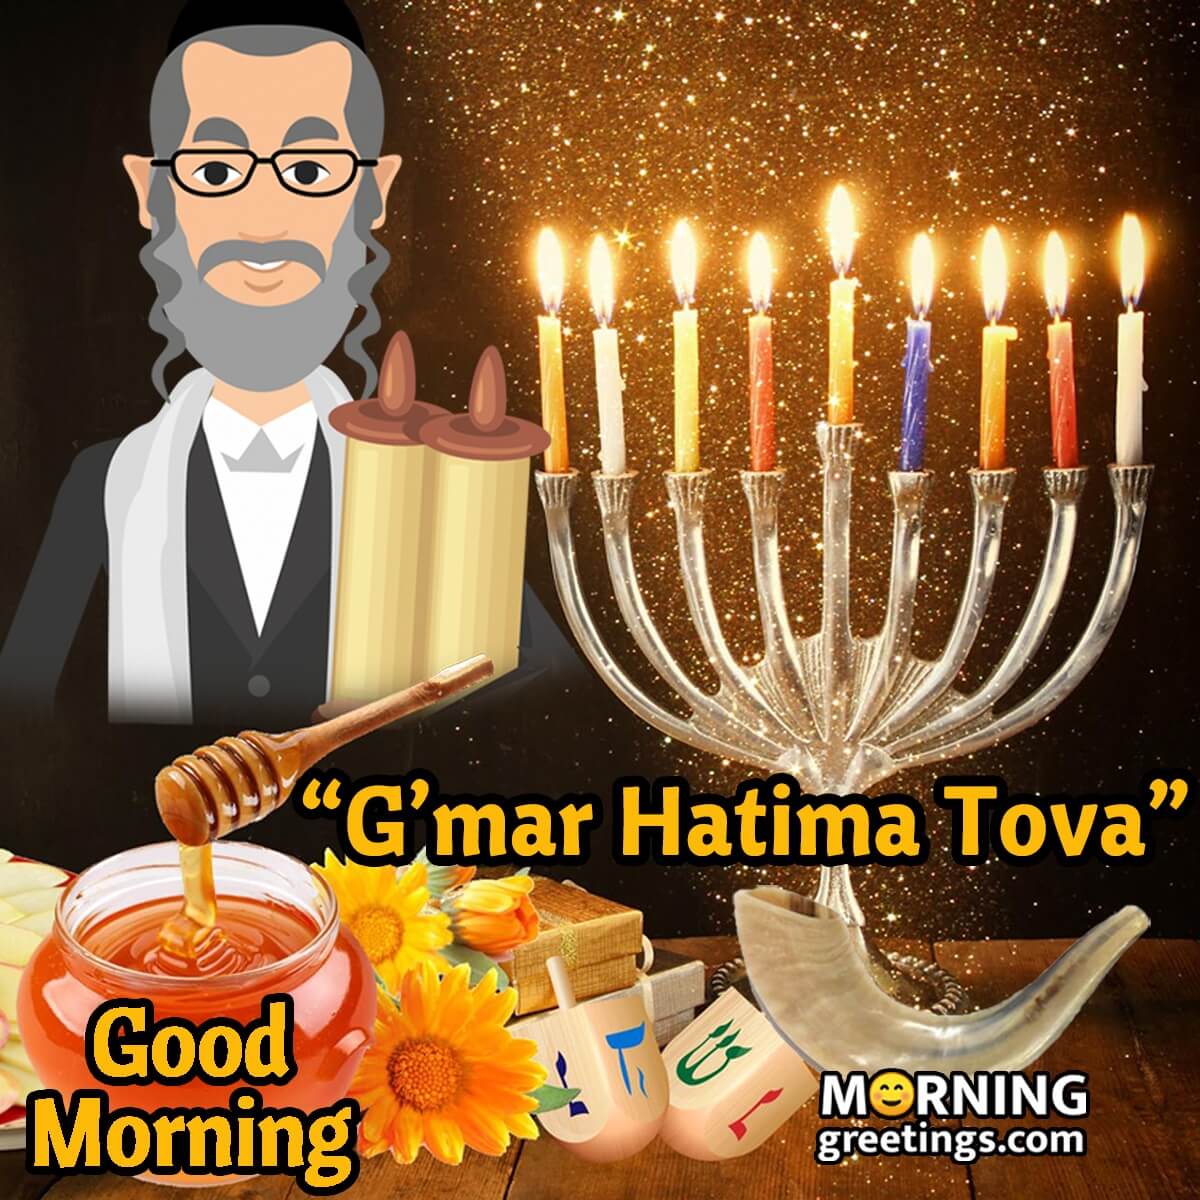 Good Morning G’mar Hatima Tova